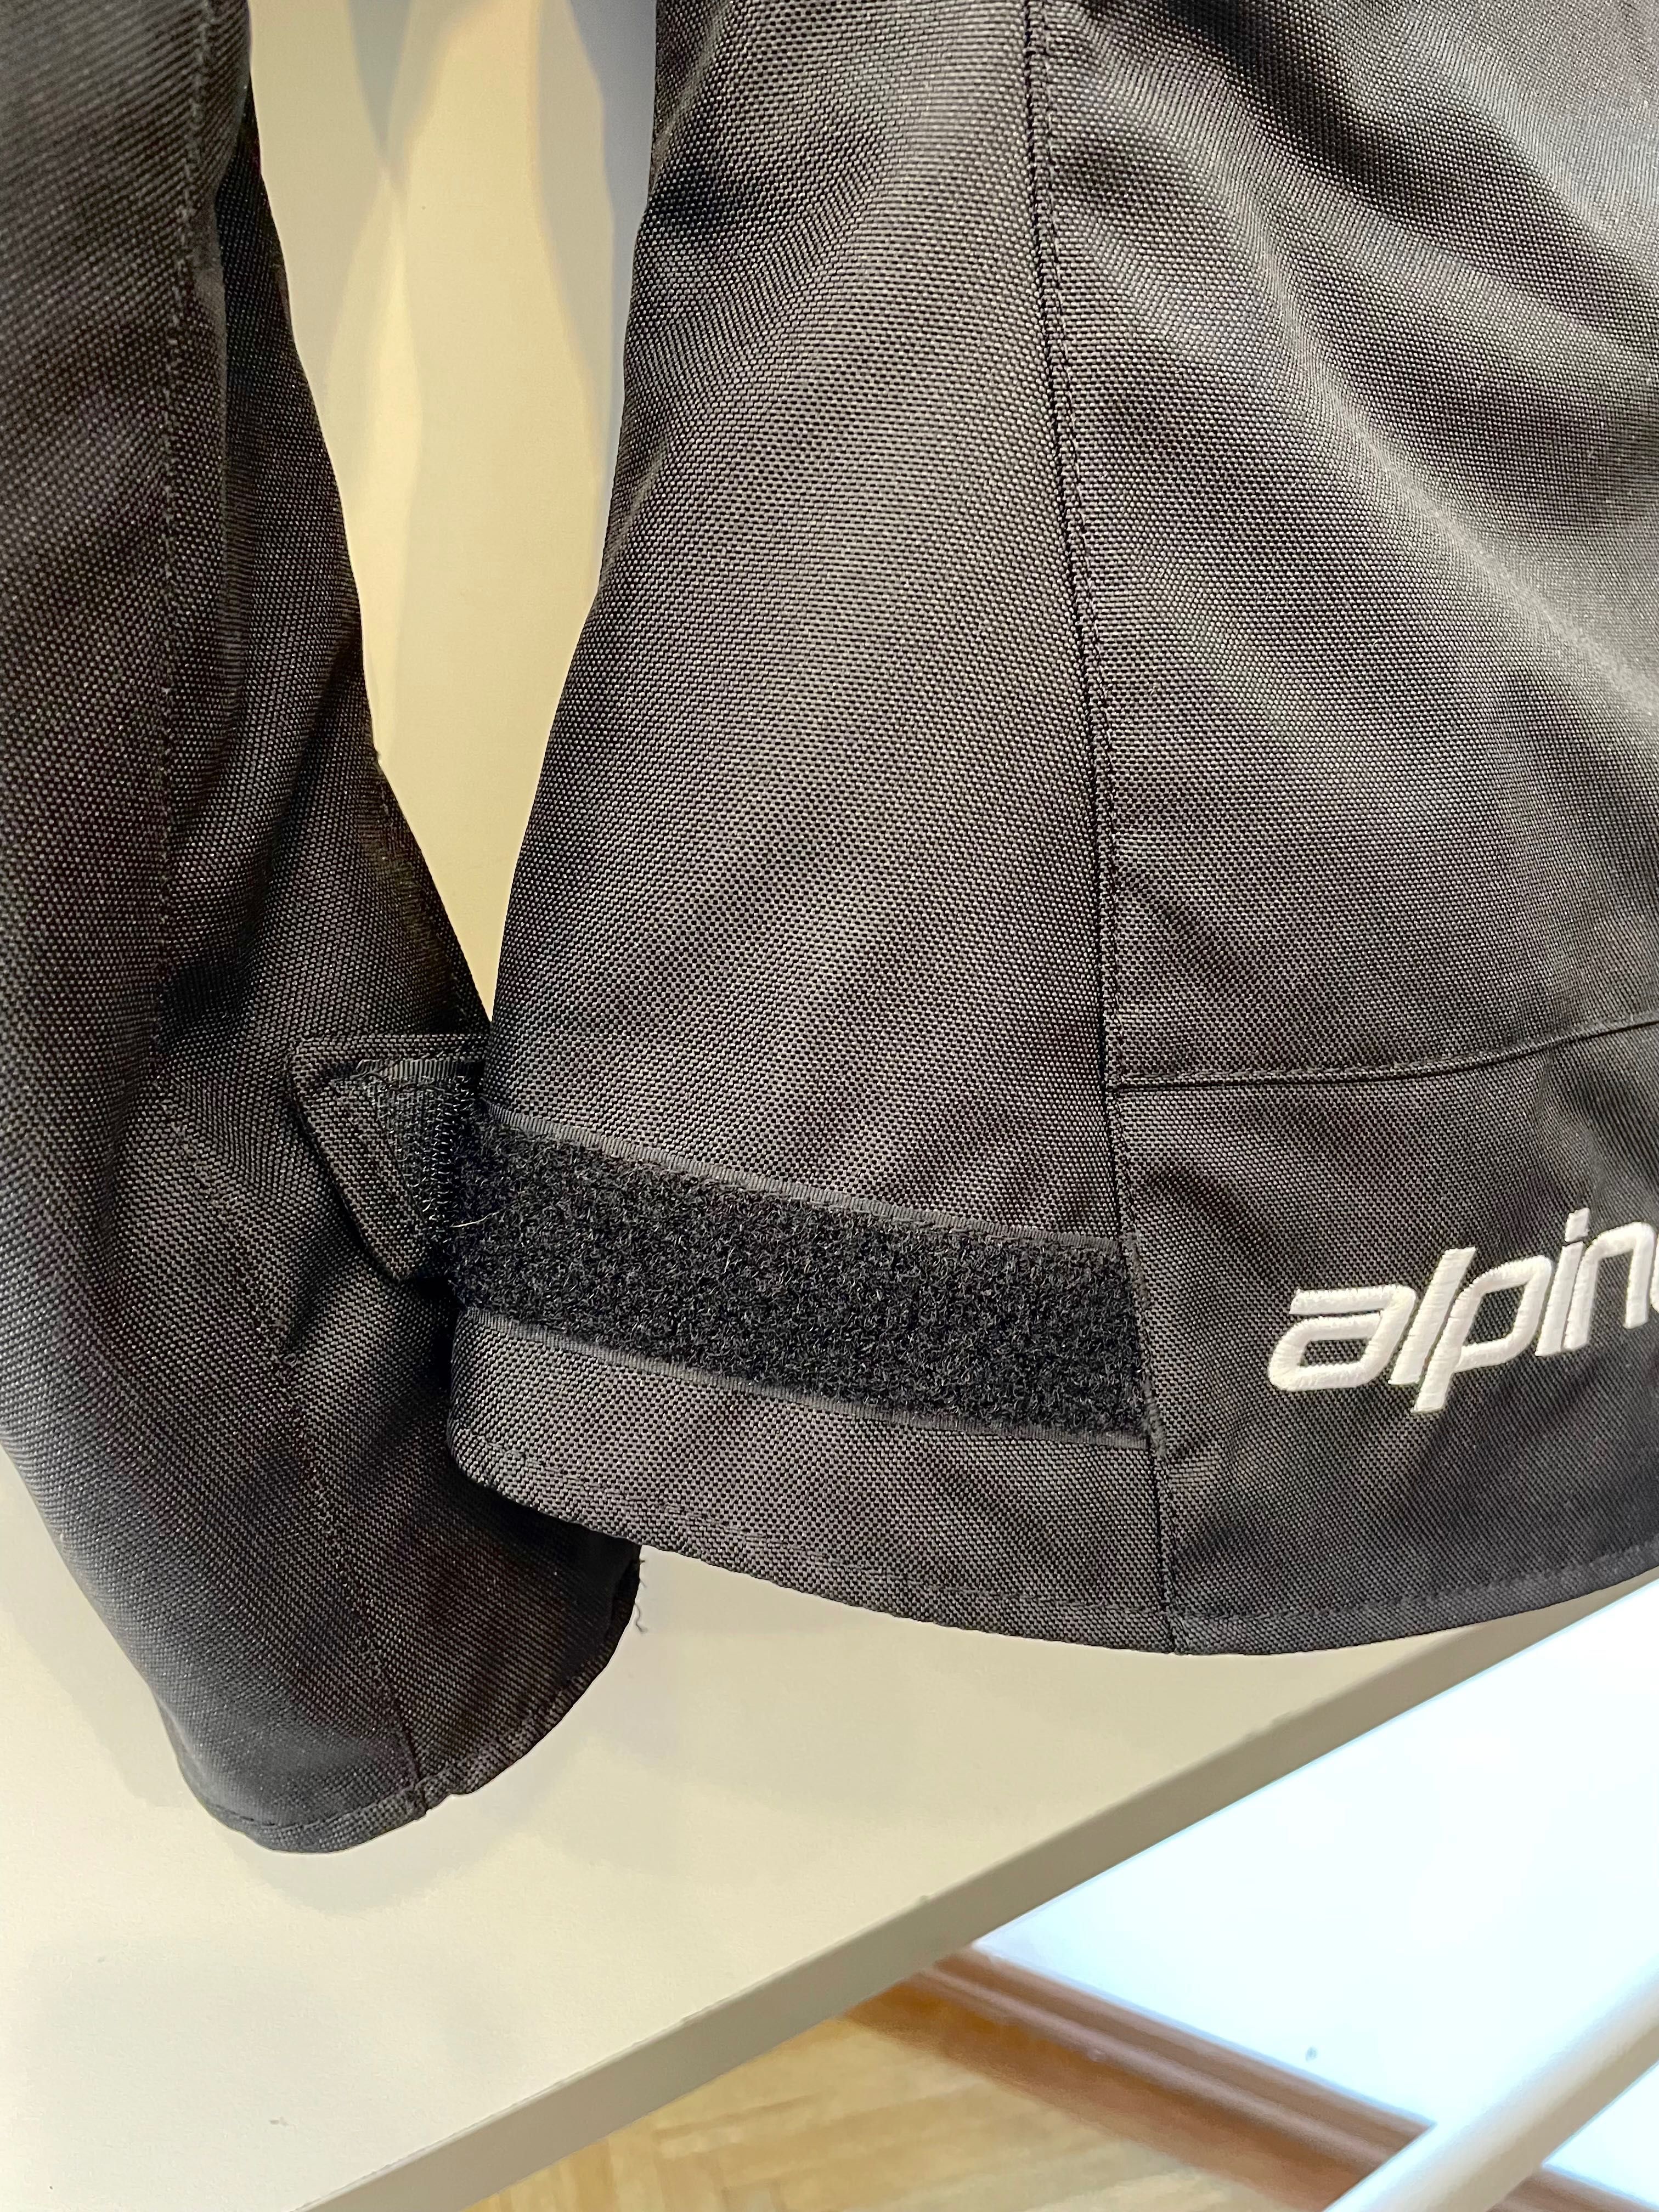 Geacă moto damă neagră Alpinestars textil nepurtată, mărime XS-S